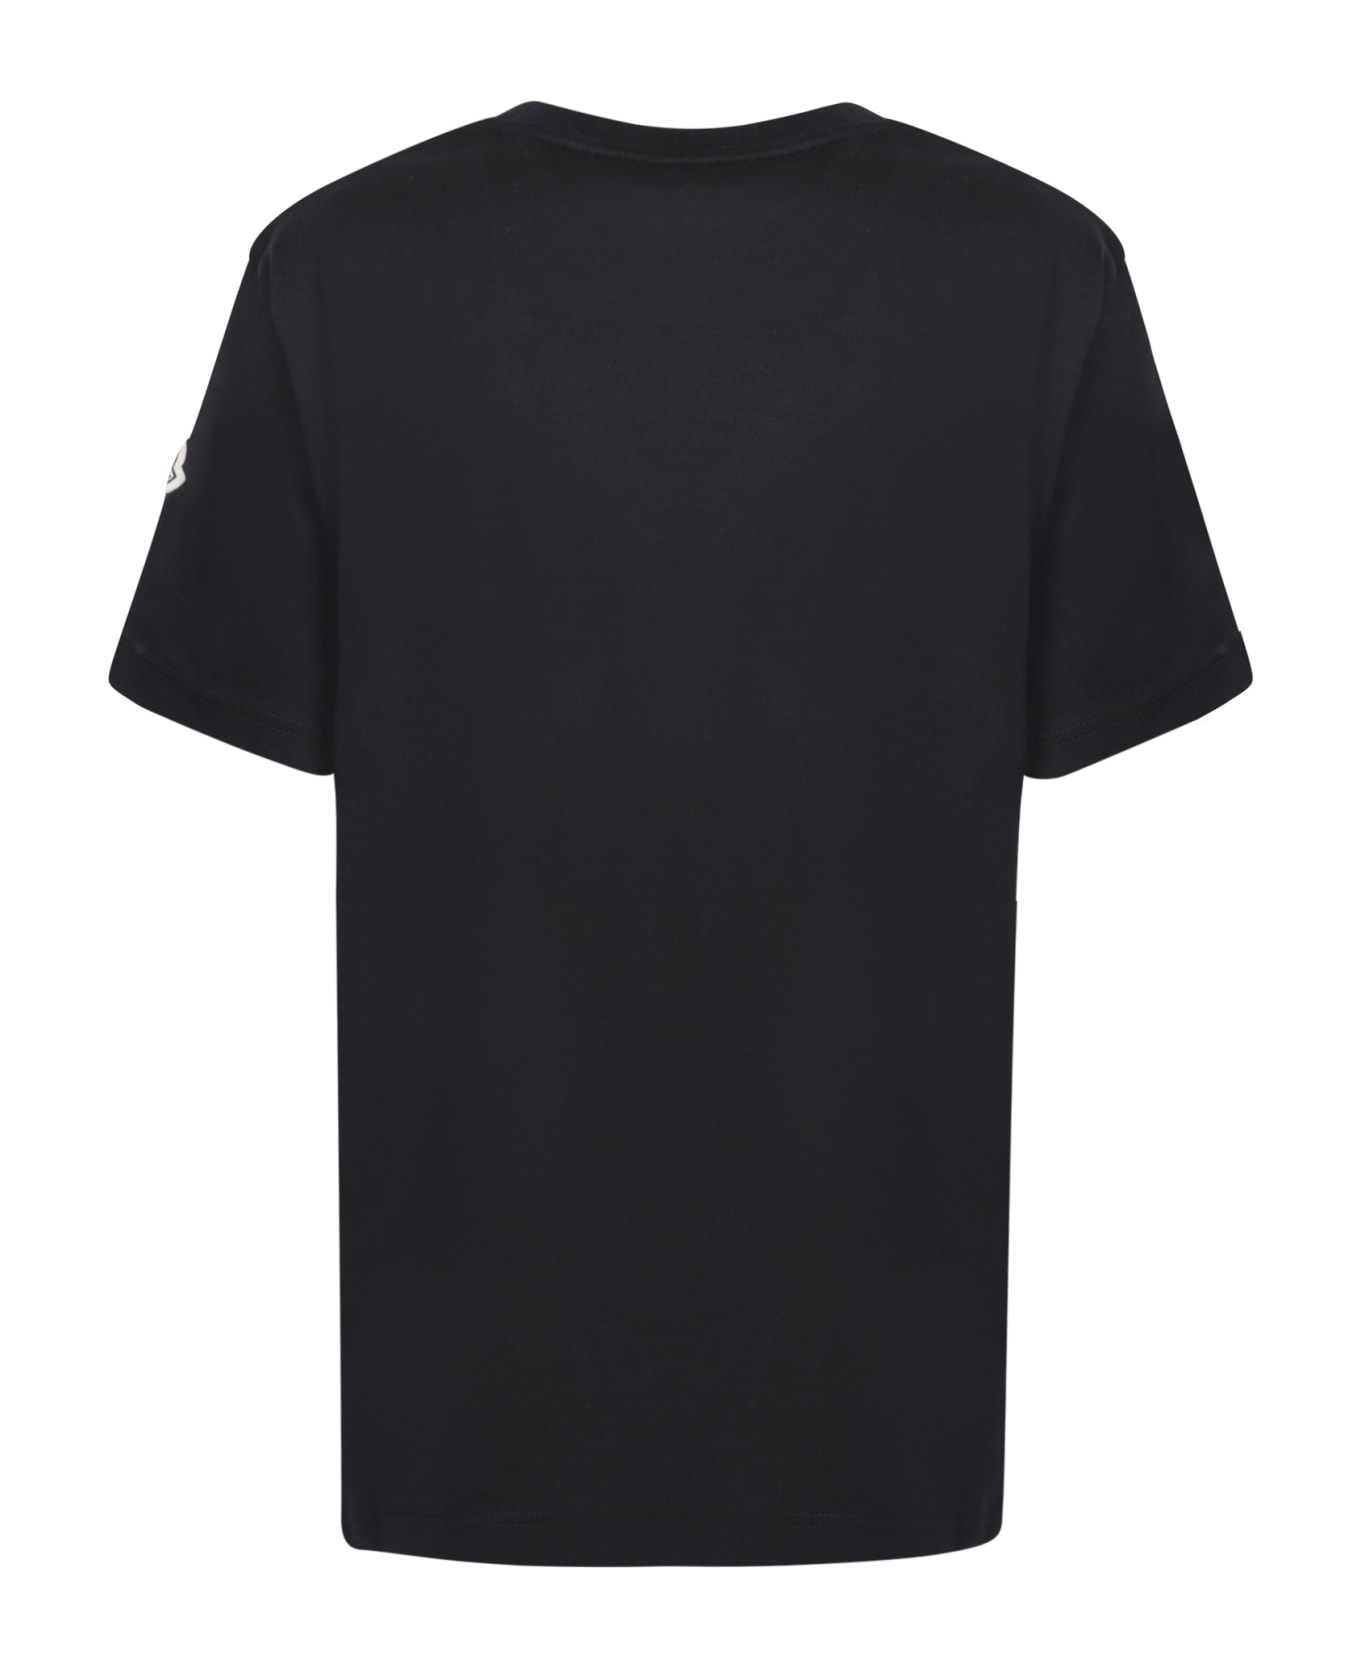 Moncler Sequin Logo T-shirt - Black